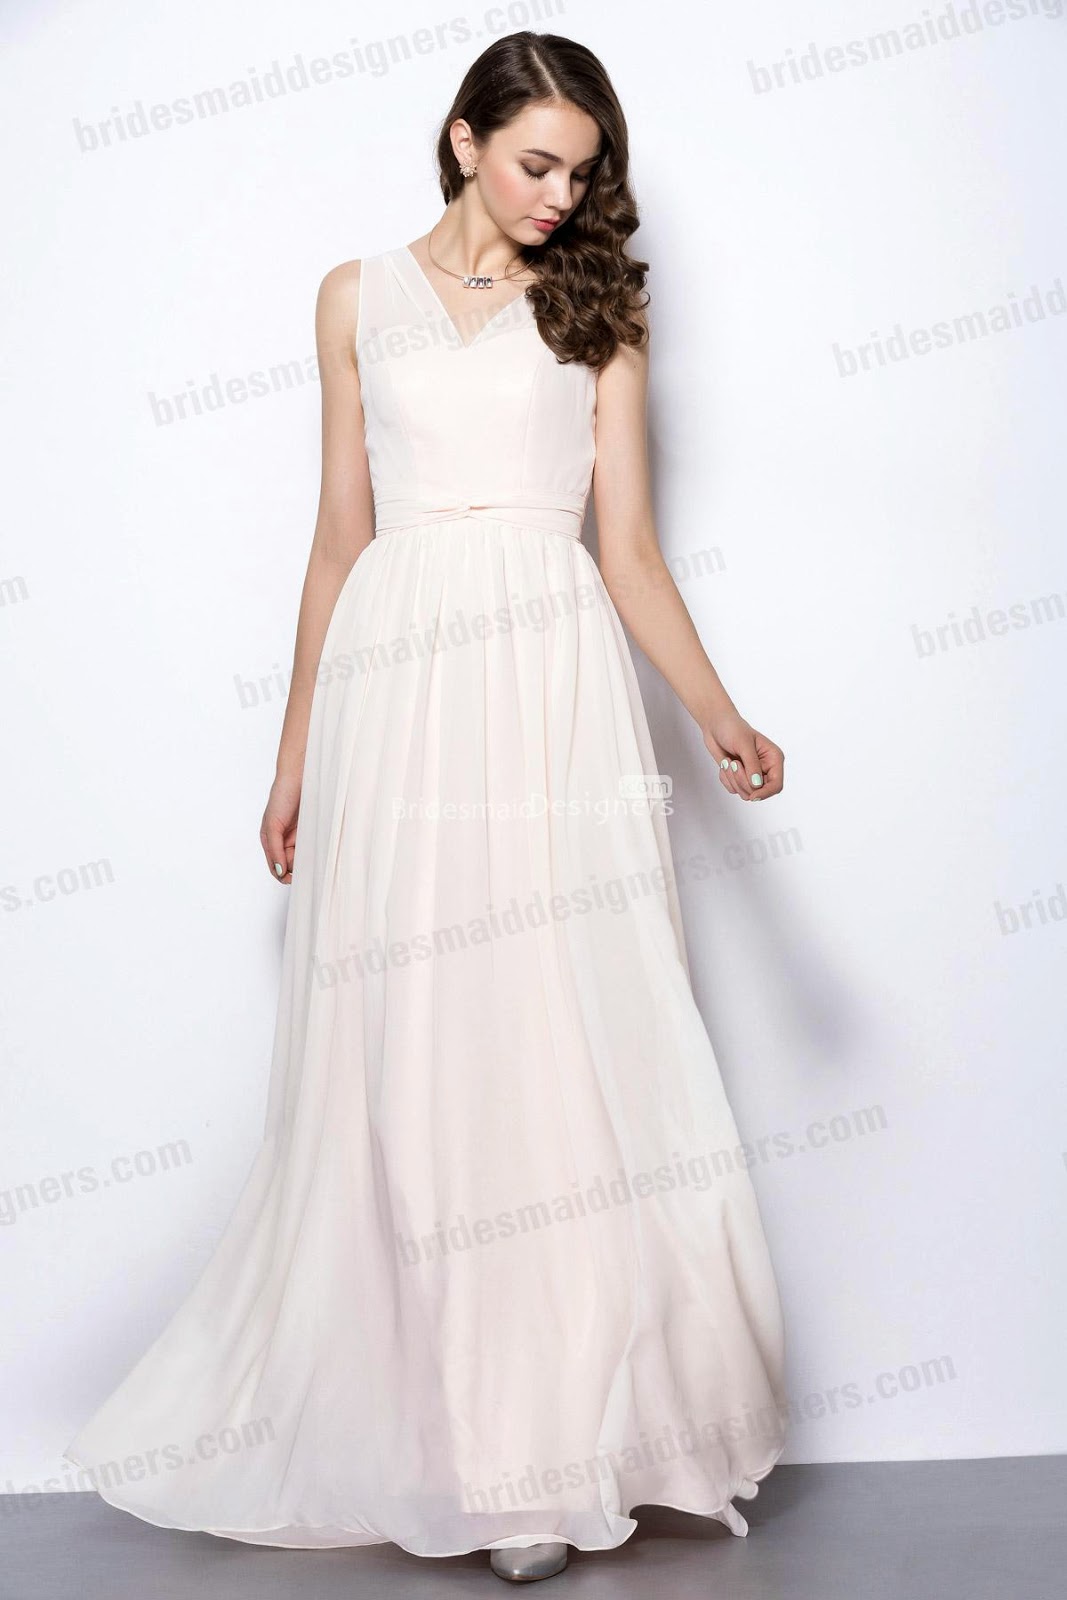 http://www.bridesmaiddesigners.com/v-neck-shoulder-straps-illusion-v-back-floor-length-blush-bridesmaid-dress-1061.html